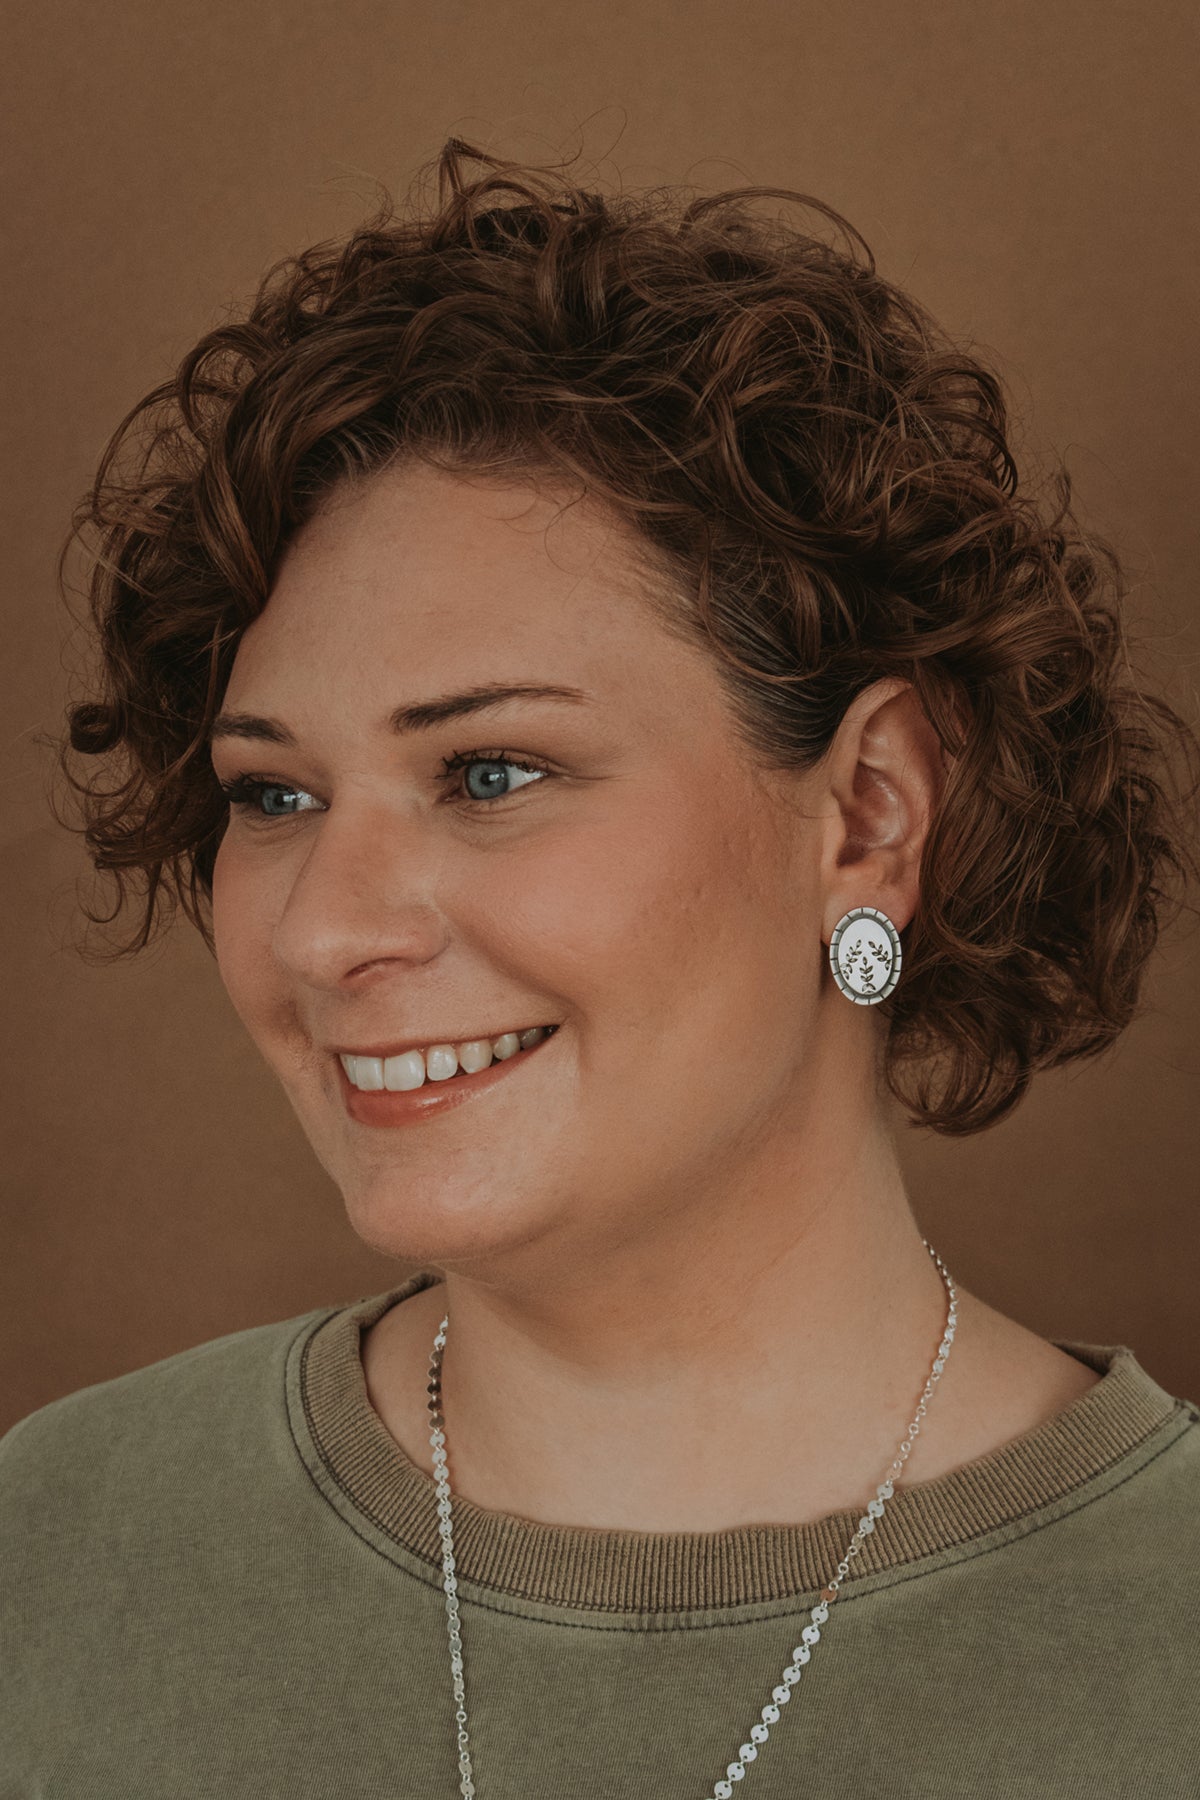 Fern Forest Stud Earrings - MADE TO ORDER - Third Hand Silversmith handmade jewelry, Bozeman, Montana